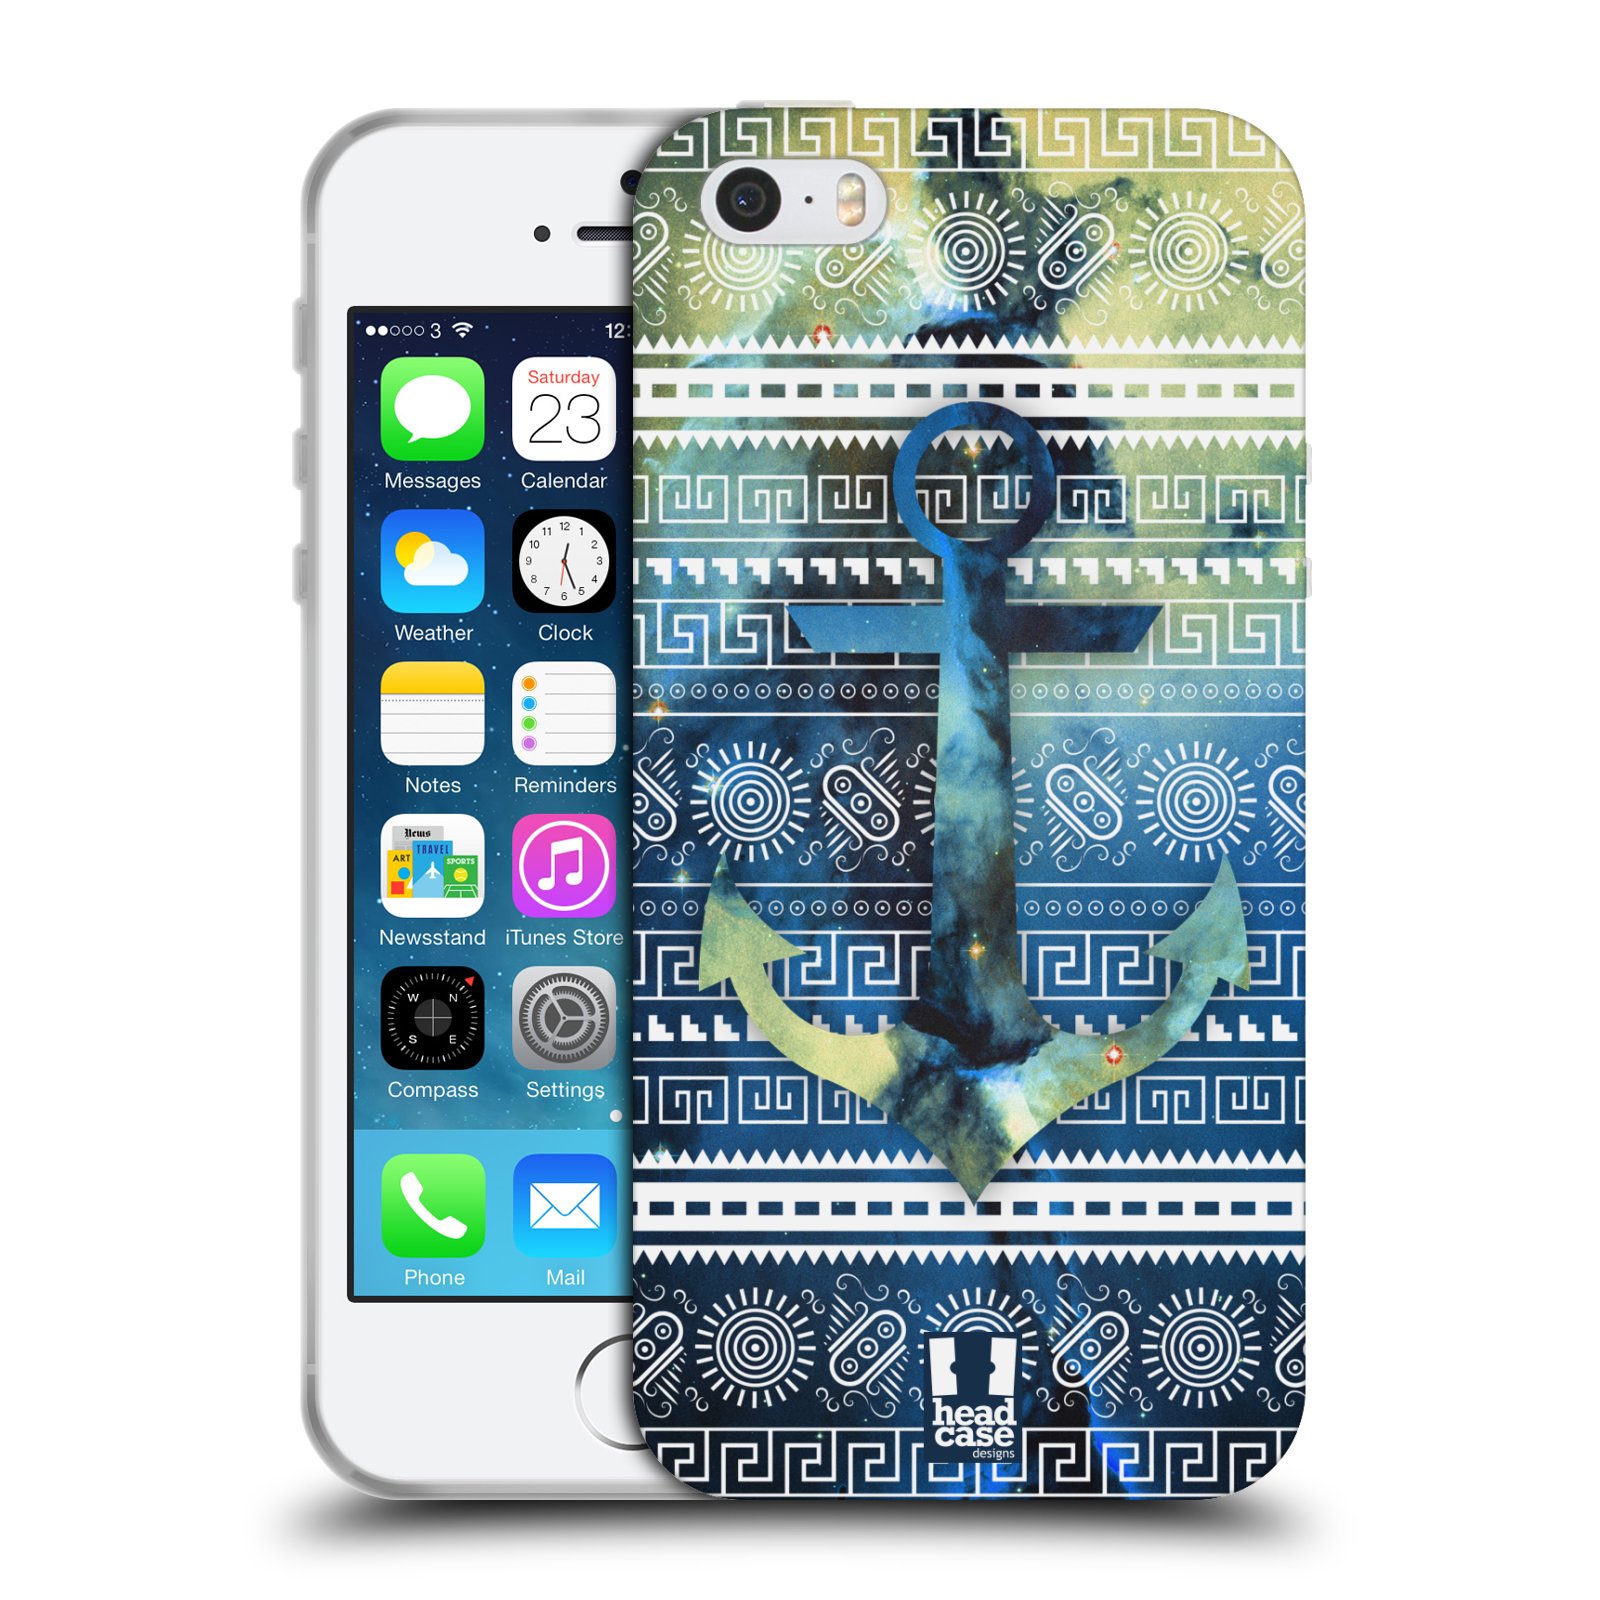 Silikonové pouzdro na mobil Apple iPhone 5, 5S, SE - Head Case - NEBULA KOTVA (Silikonový kryt, obal, pouzdro na mobilní telefon Apple iPhone SE, 5S a 5 s motivem NEBULA KOTVA)